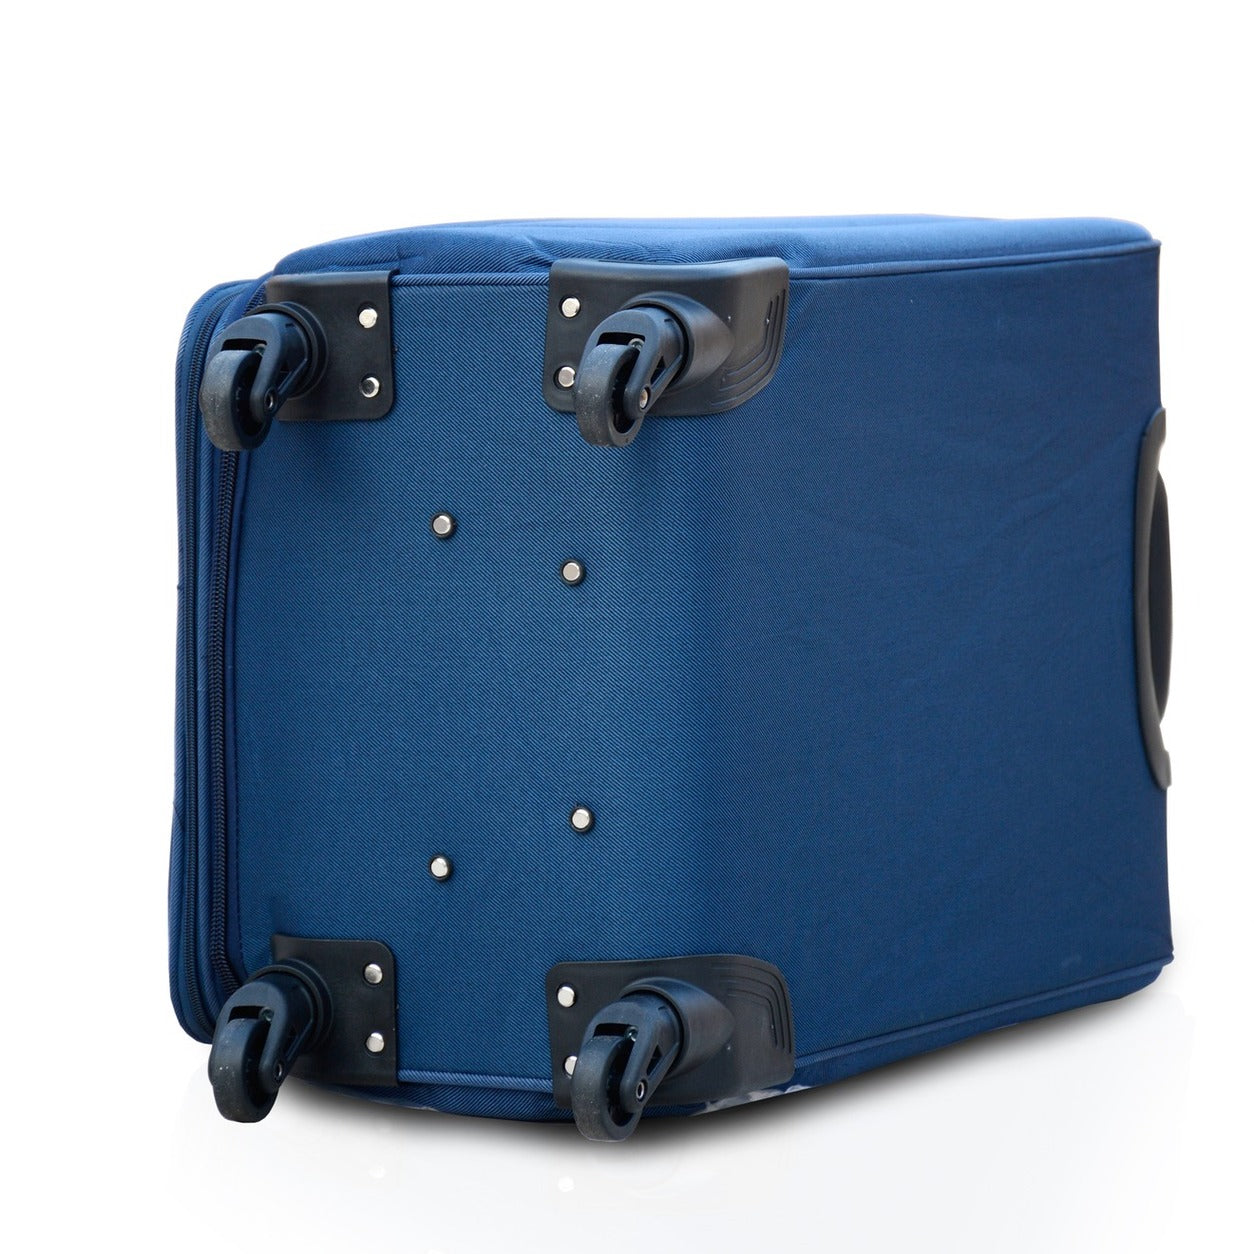 20" Blue Colour SJ JIAN 4 Wheel Luggage Lightweight Soft Material Carry On Trolley Bag